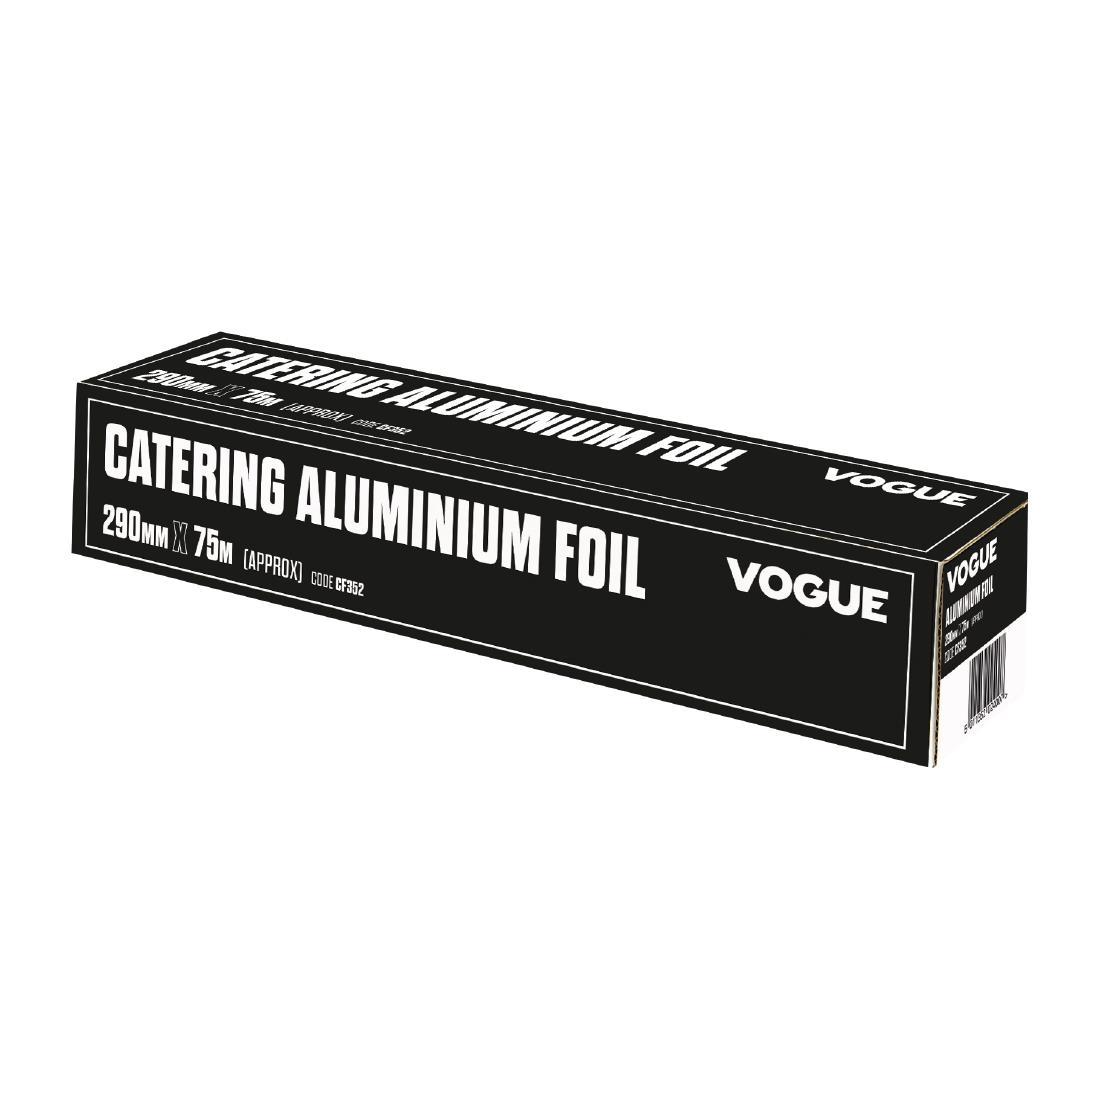 Vogue Aluminium Foil 290mm x 75m - CF352  - 1